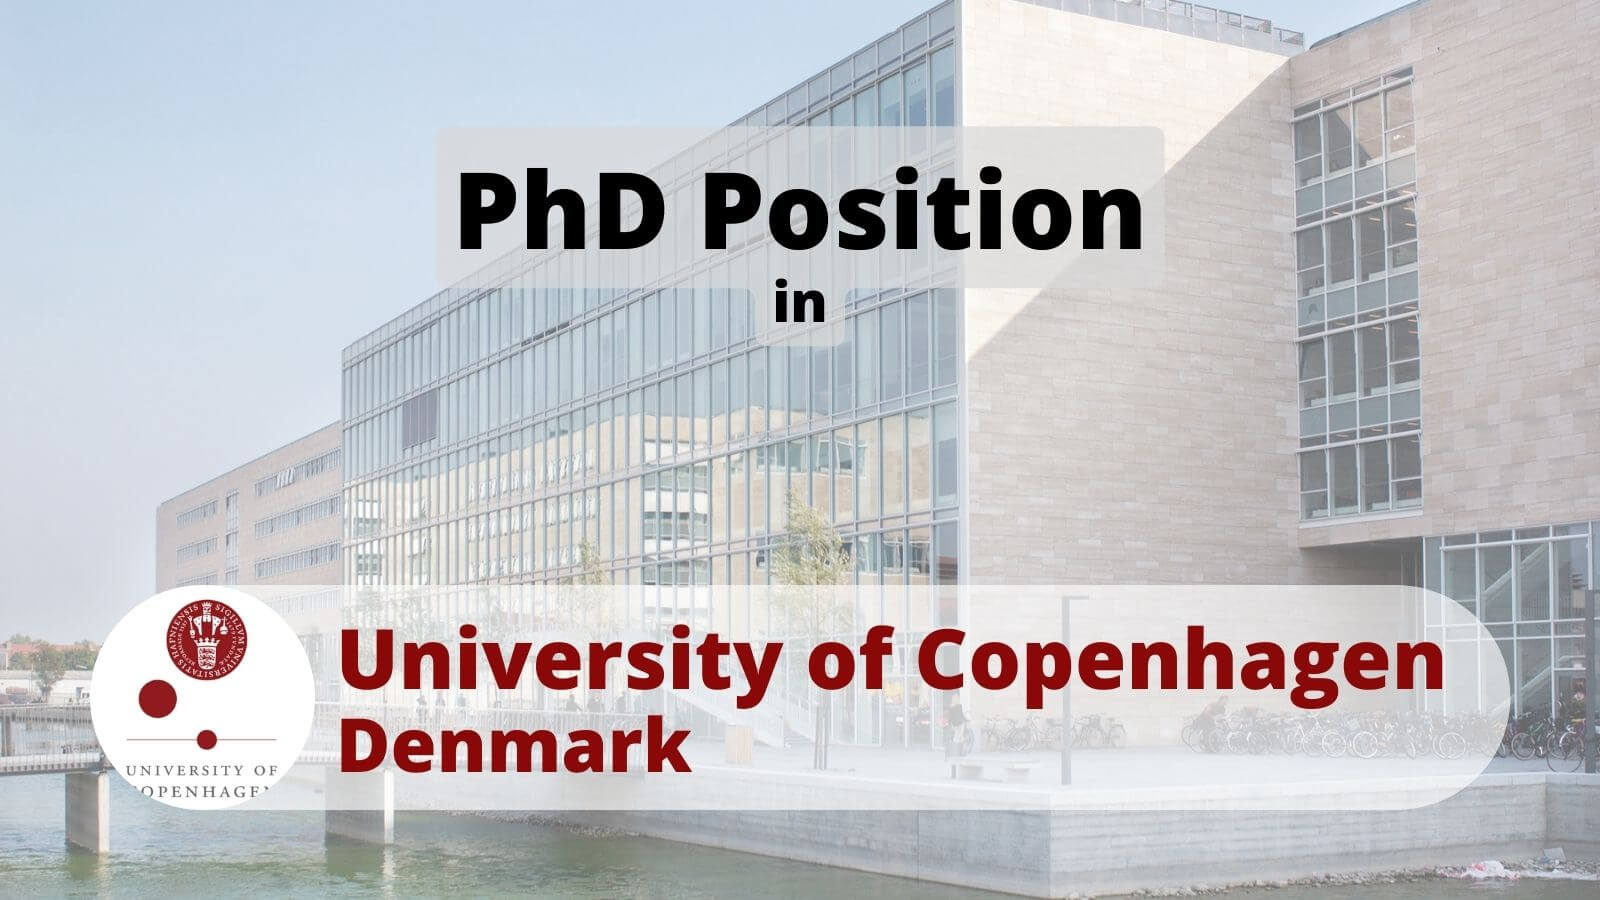 PhD Position in UCPH University of Copenhagen Denmark